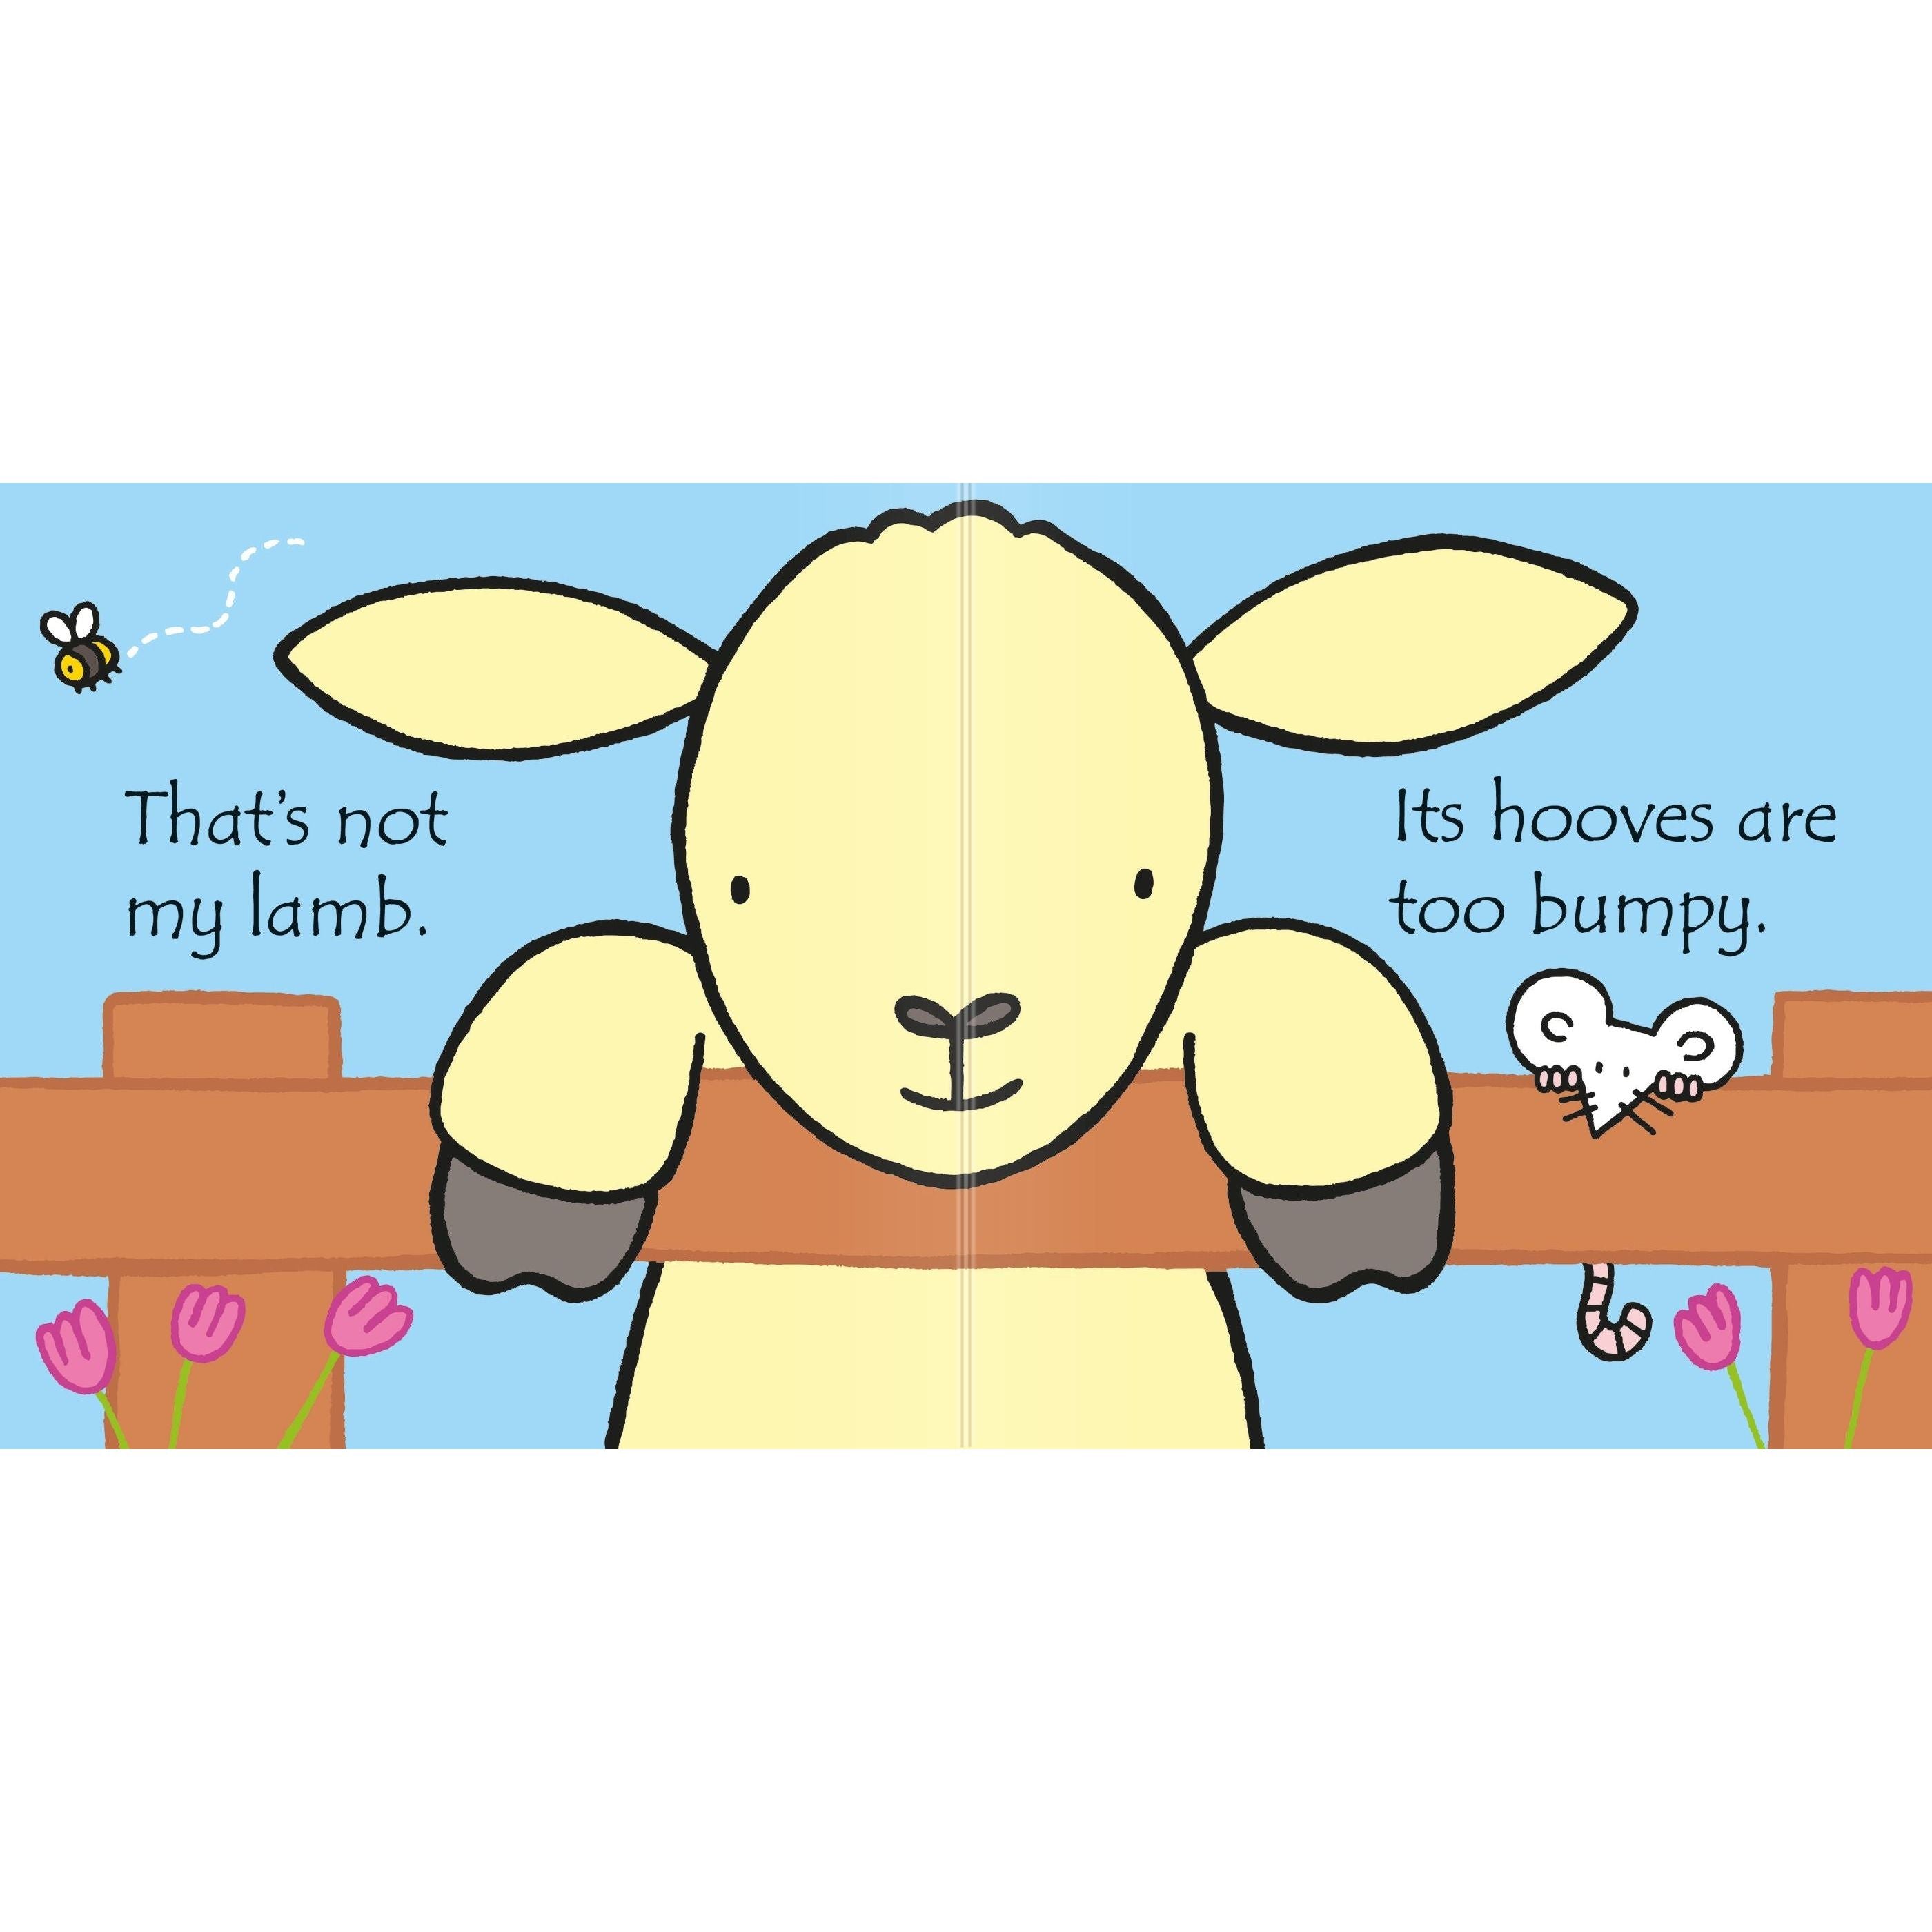 That's not my lamb…